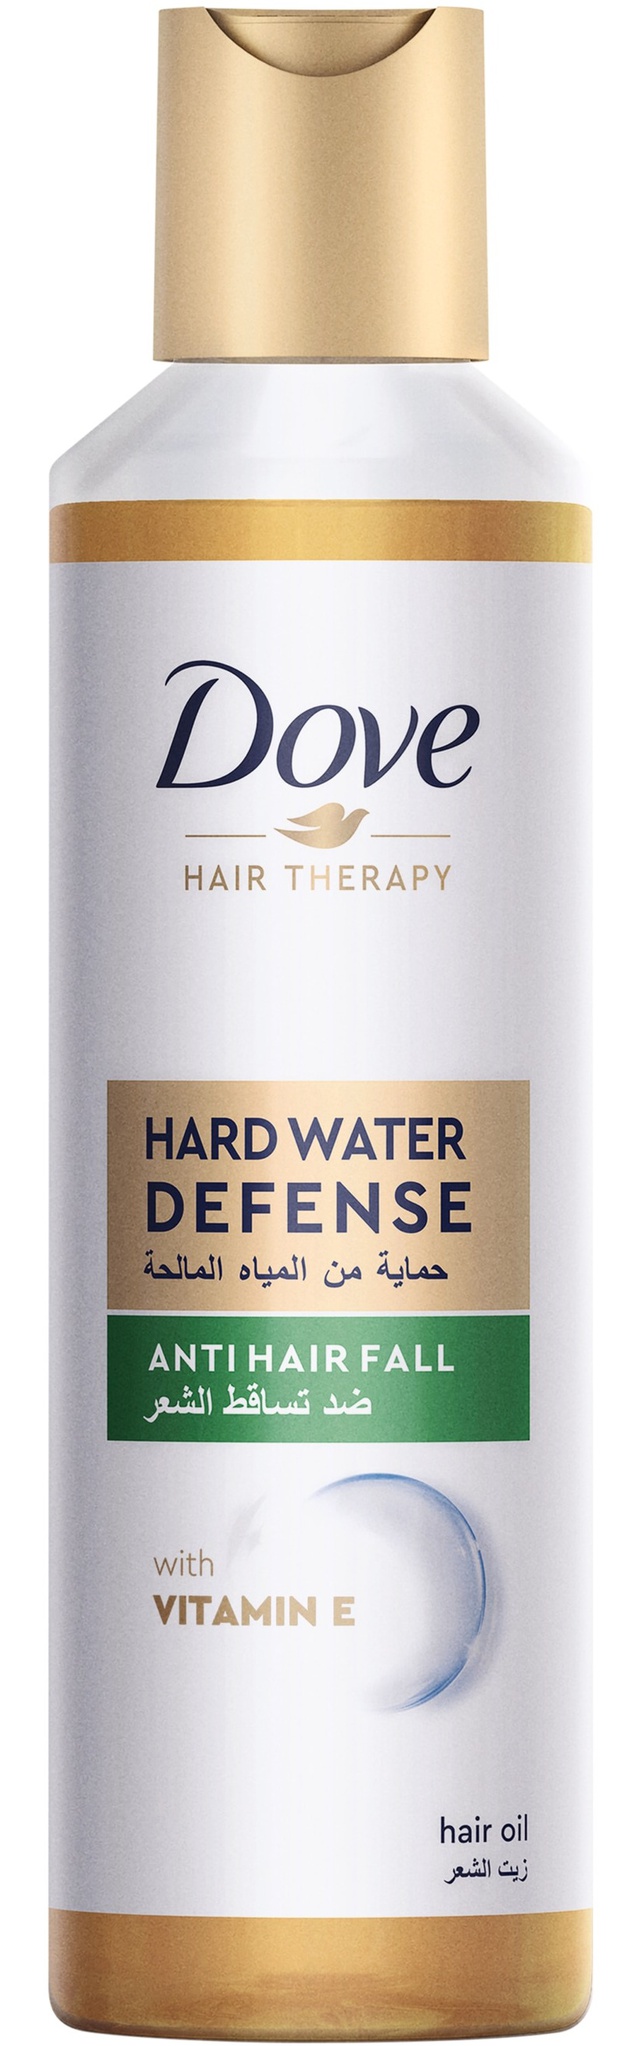 Dove Hard Water Defense Anti Hair Fall Shampoo